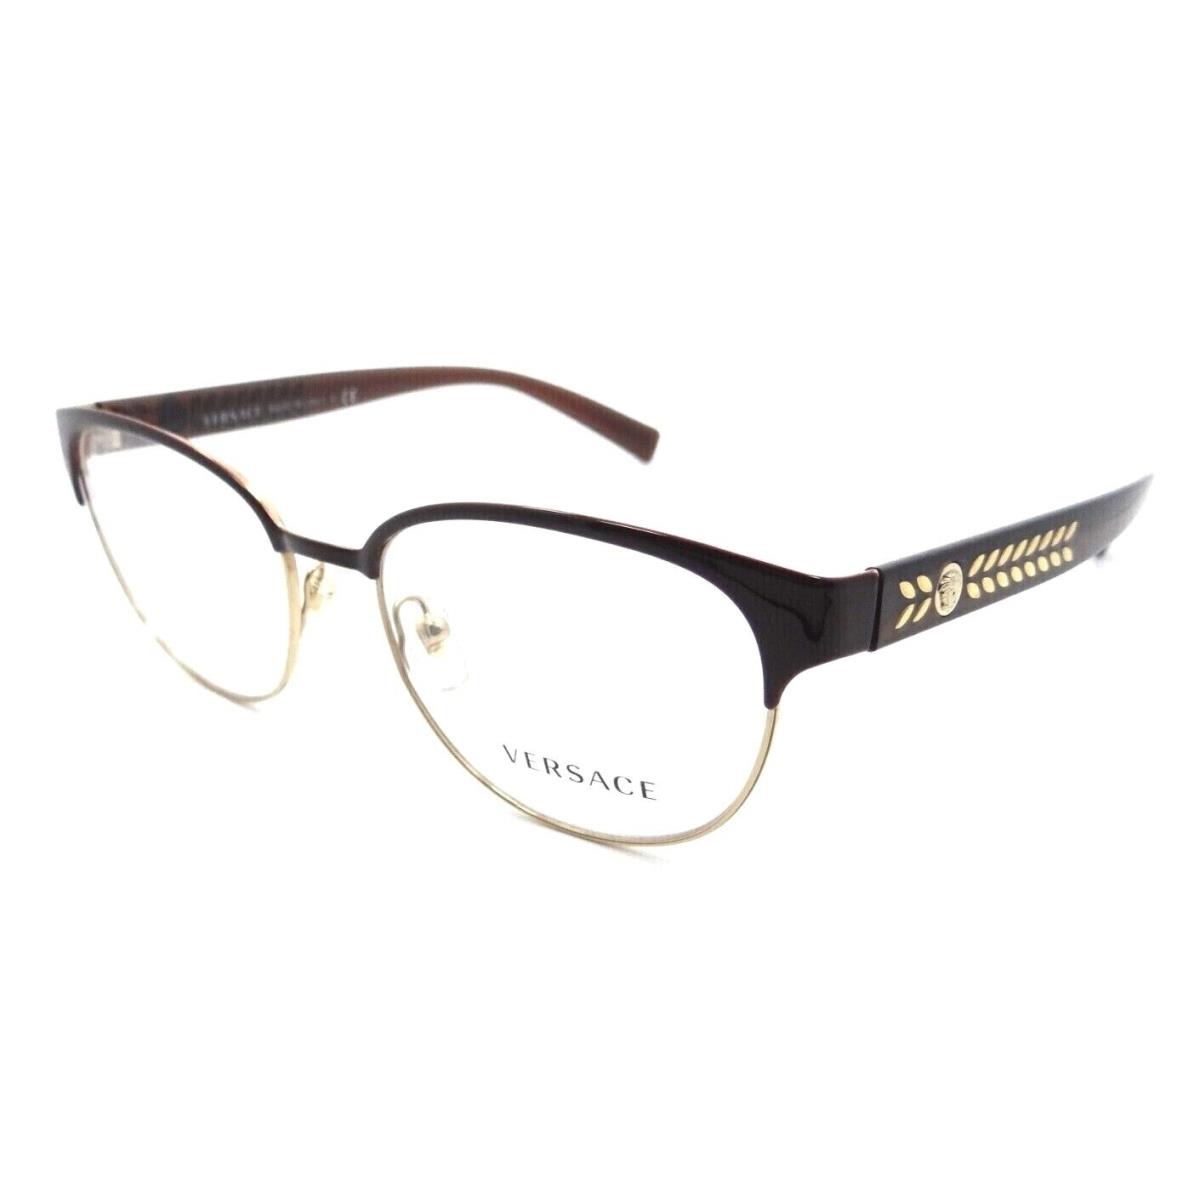 Versace Eyeglasses Frames VE 1256 1435 53-17-140 Dark Red / Gold Made in Italy